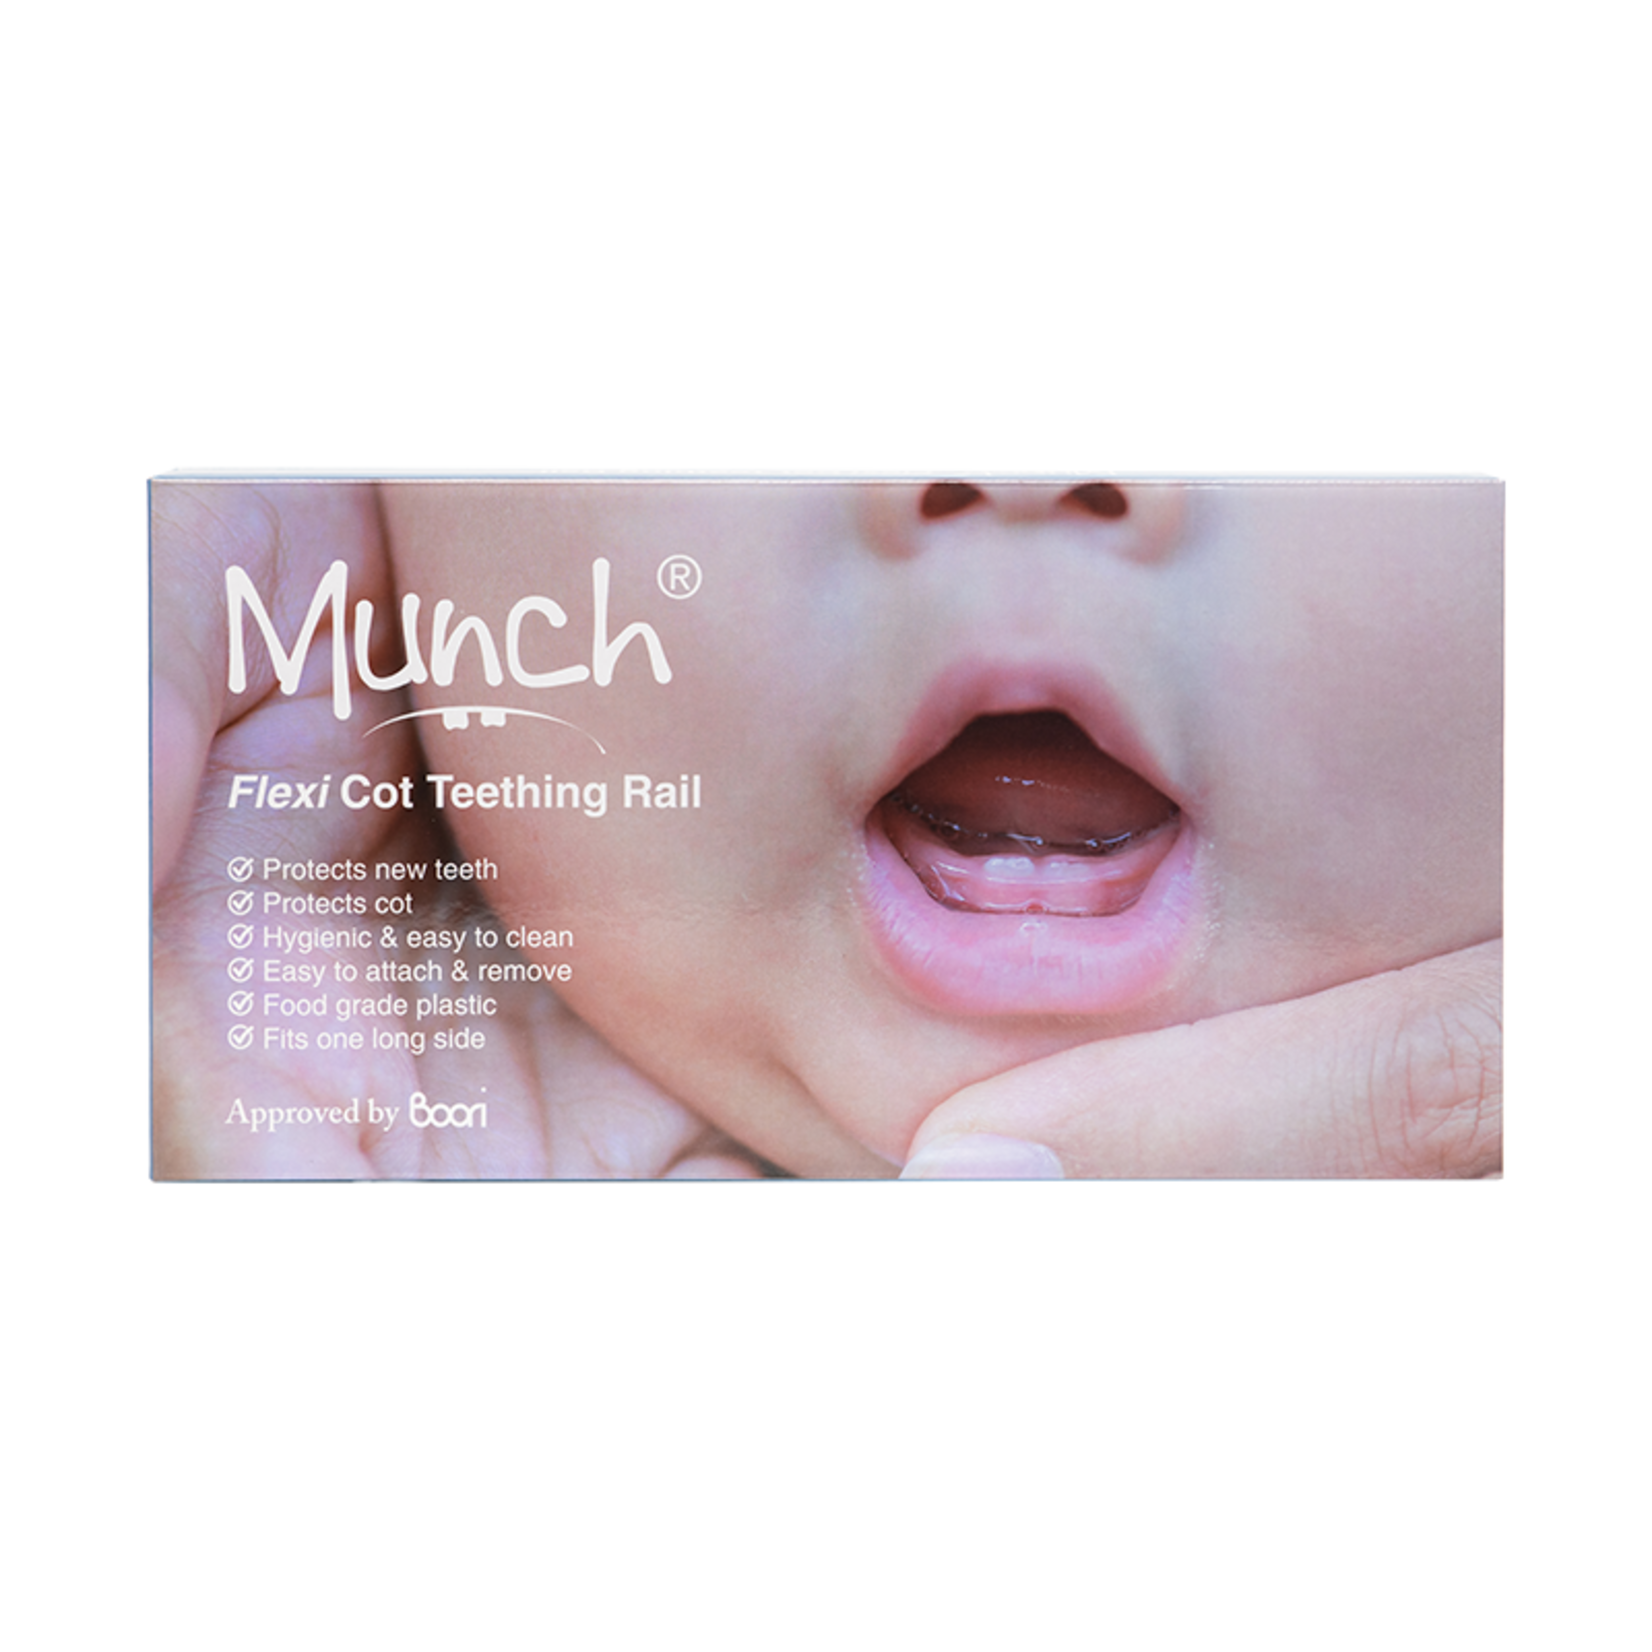 Munch Flexi Cot Teething Rail